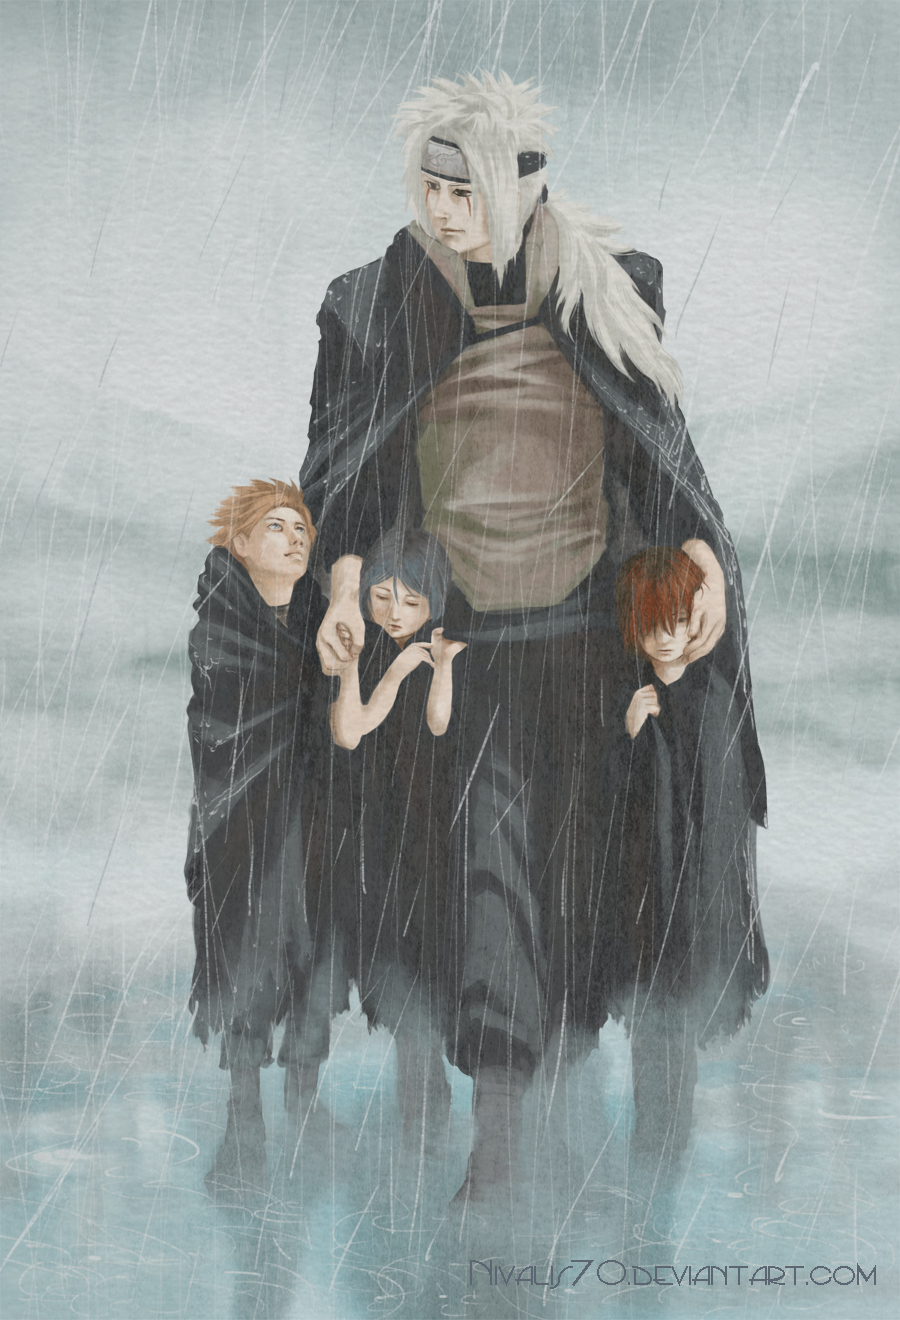 Children of the rain